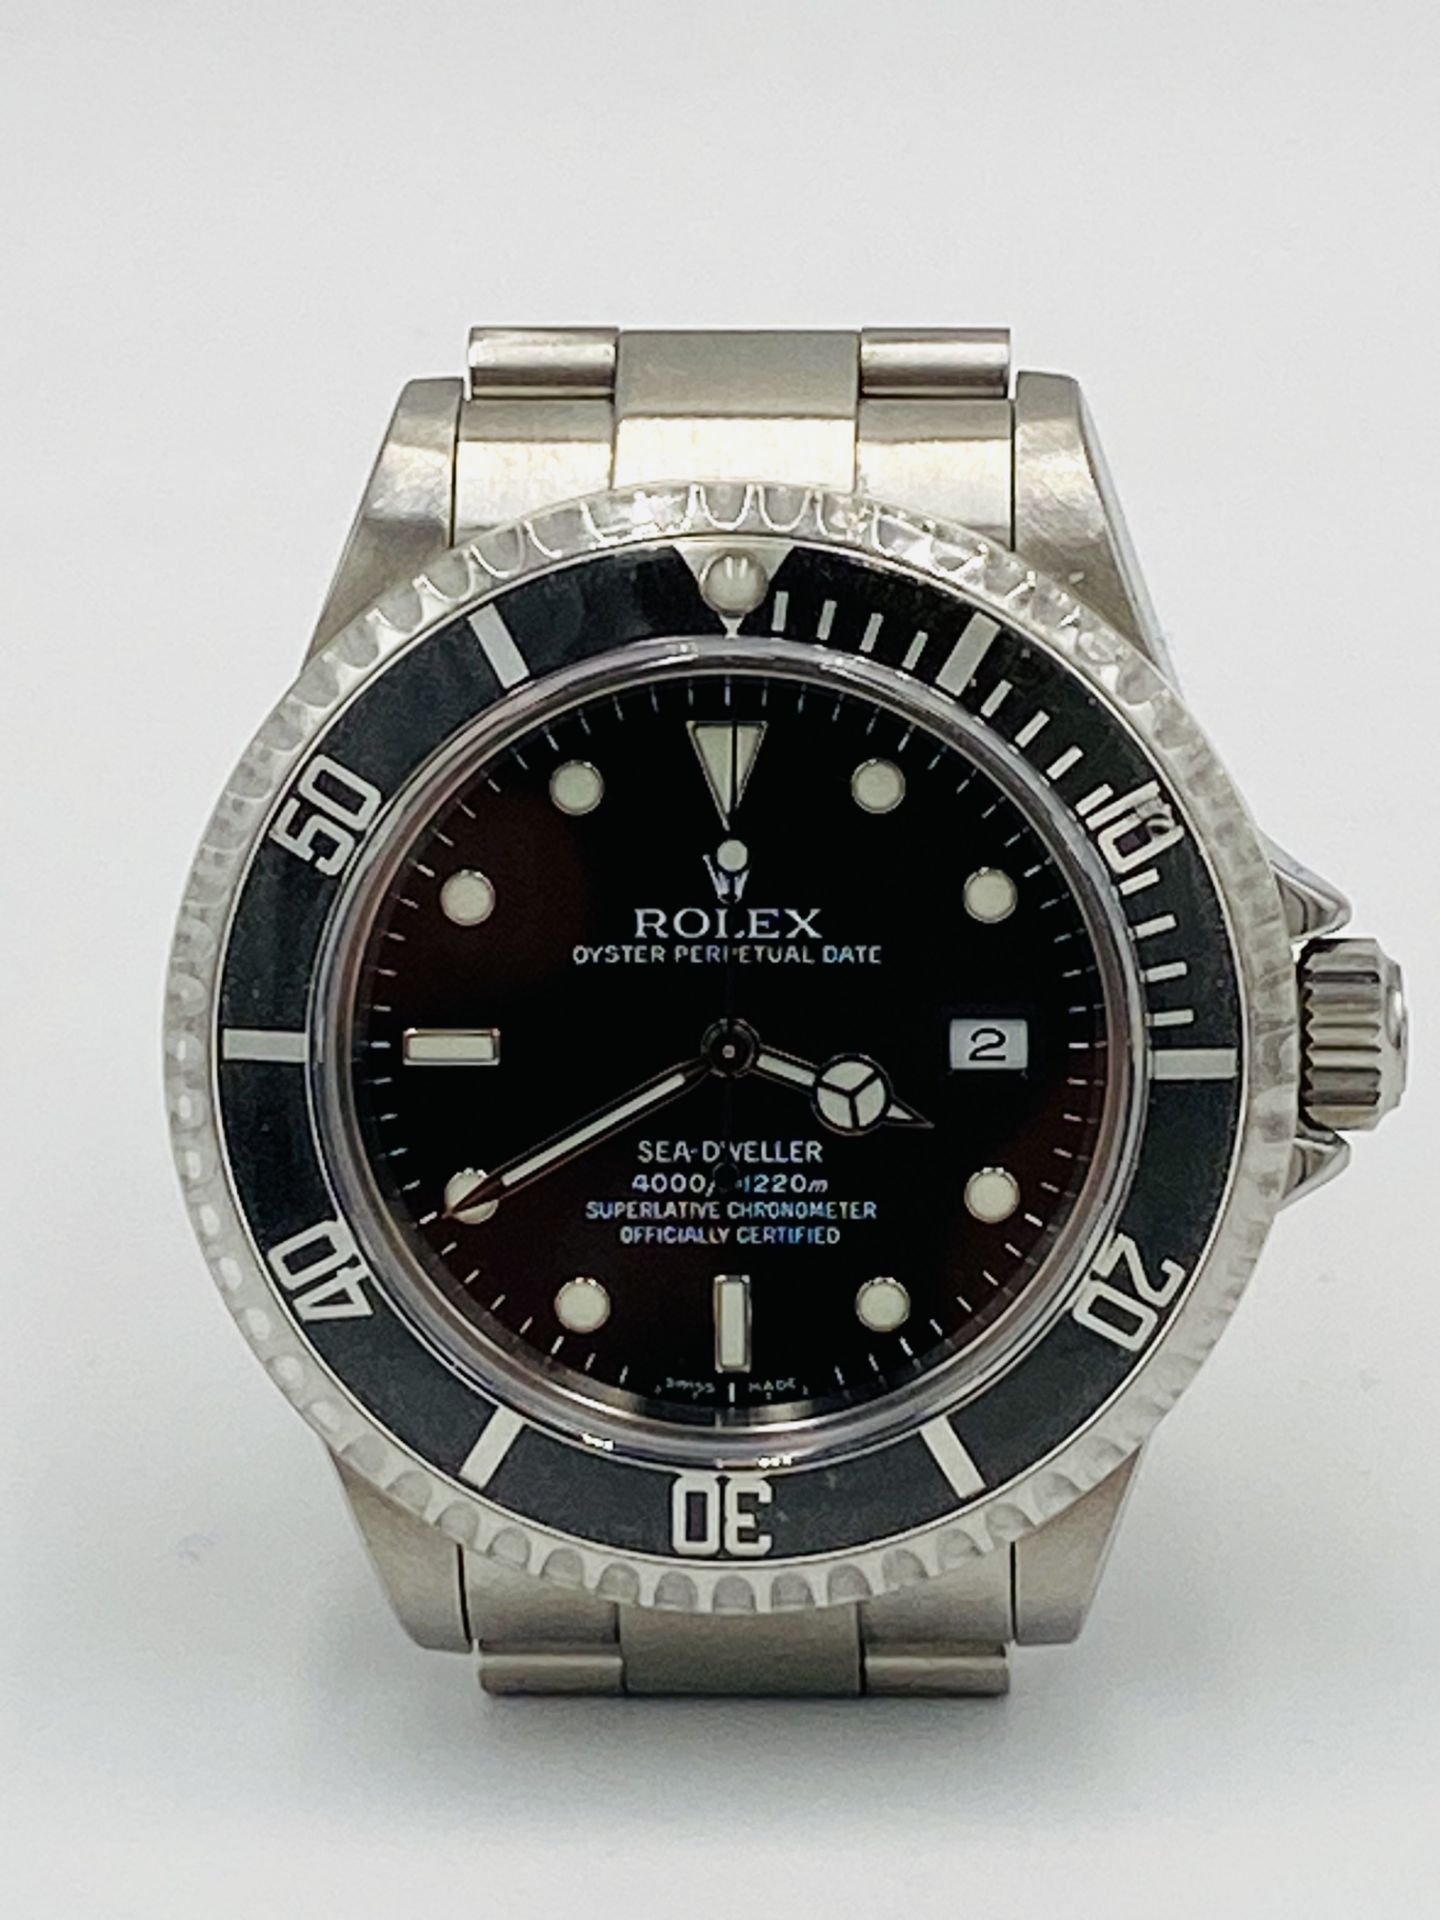 Rolex Oyster Perpetual Date Sea Dweller stainless steel wristwatch